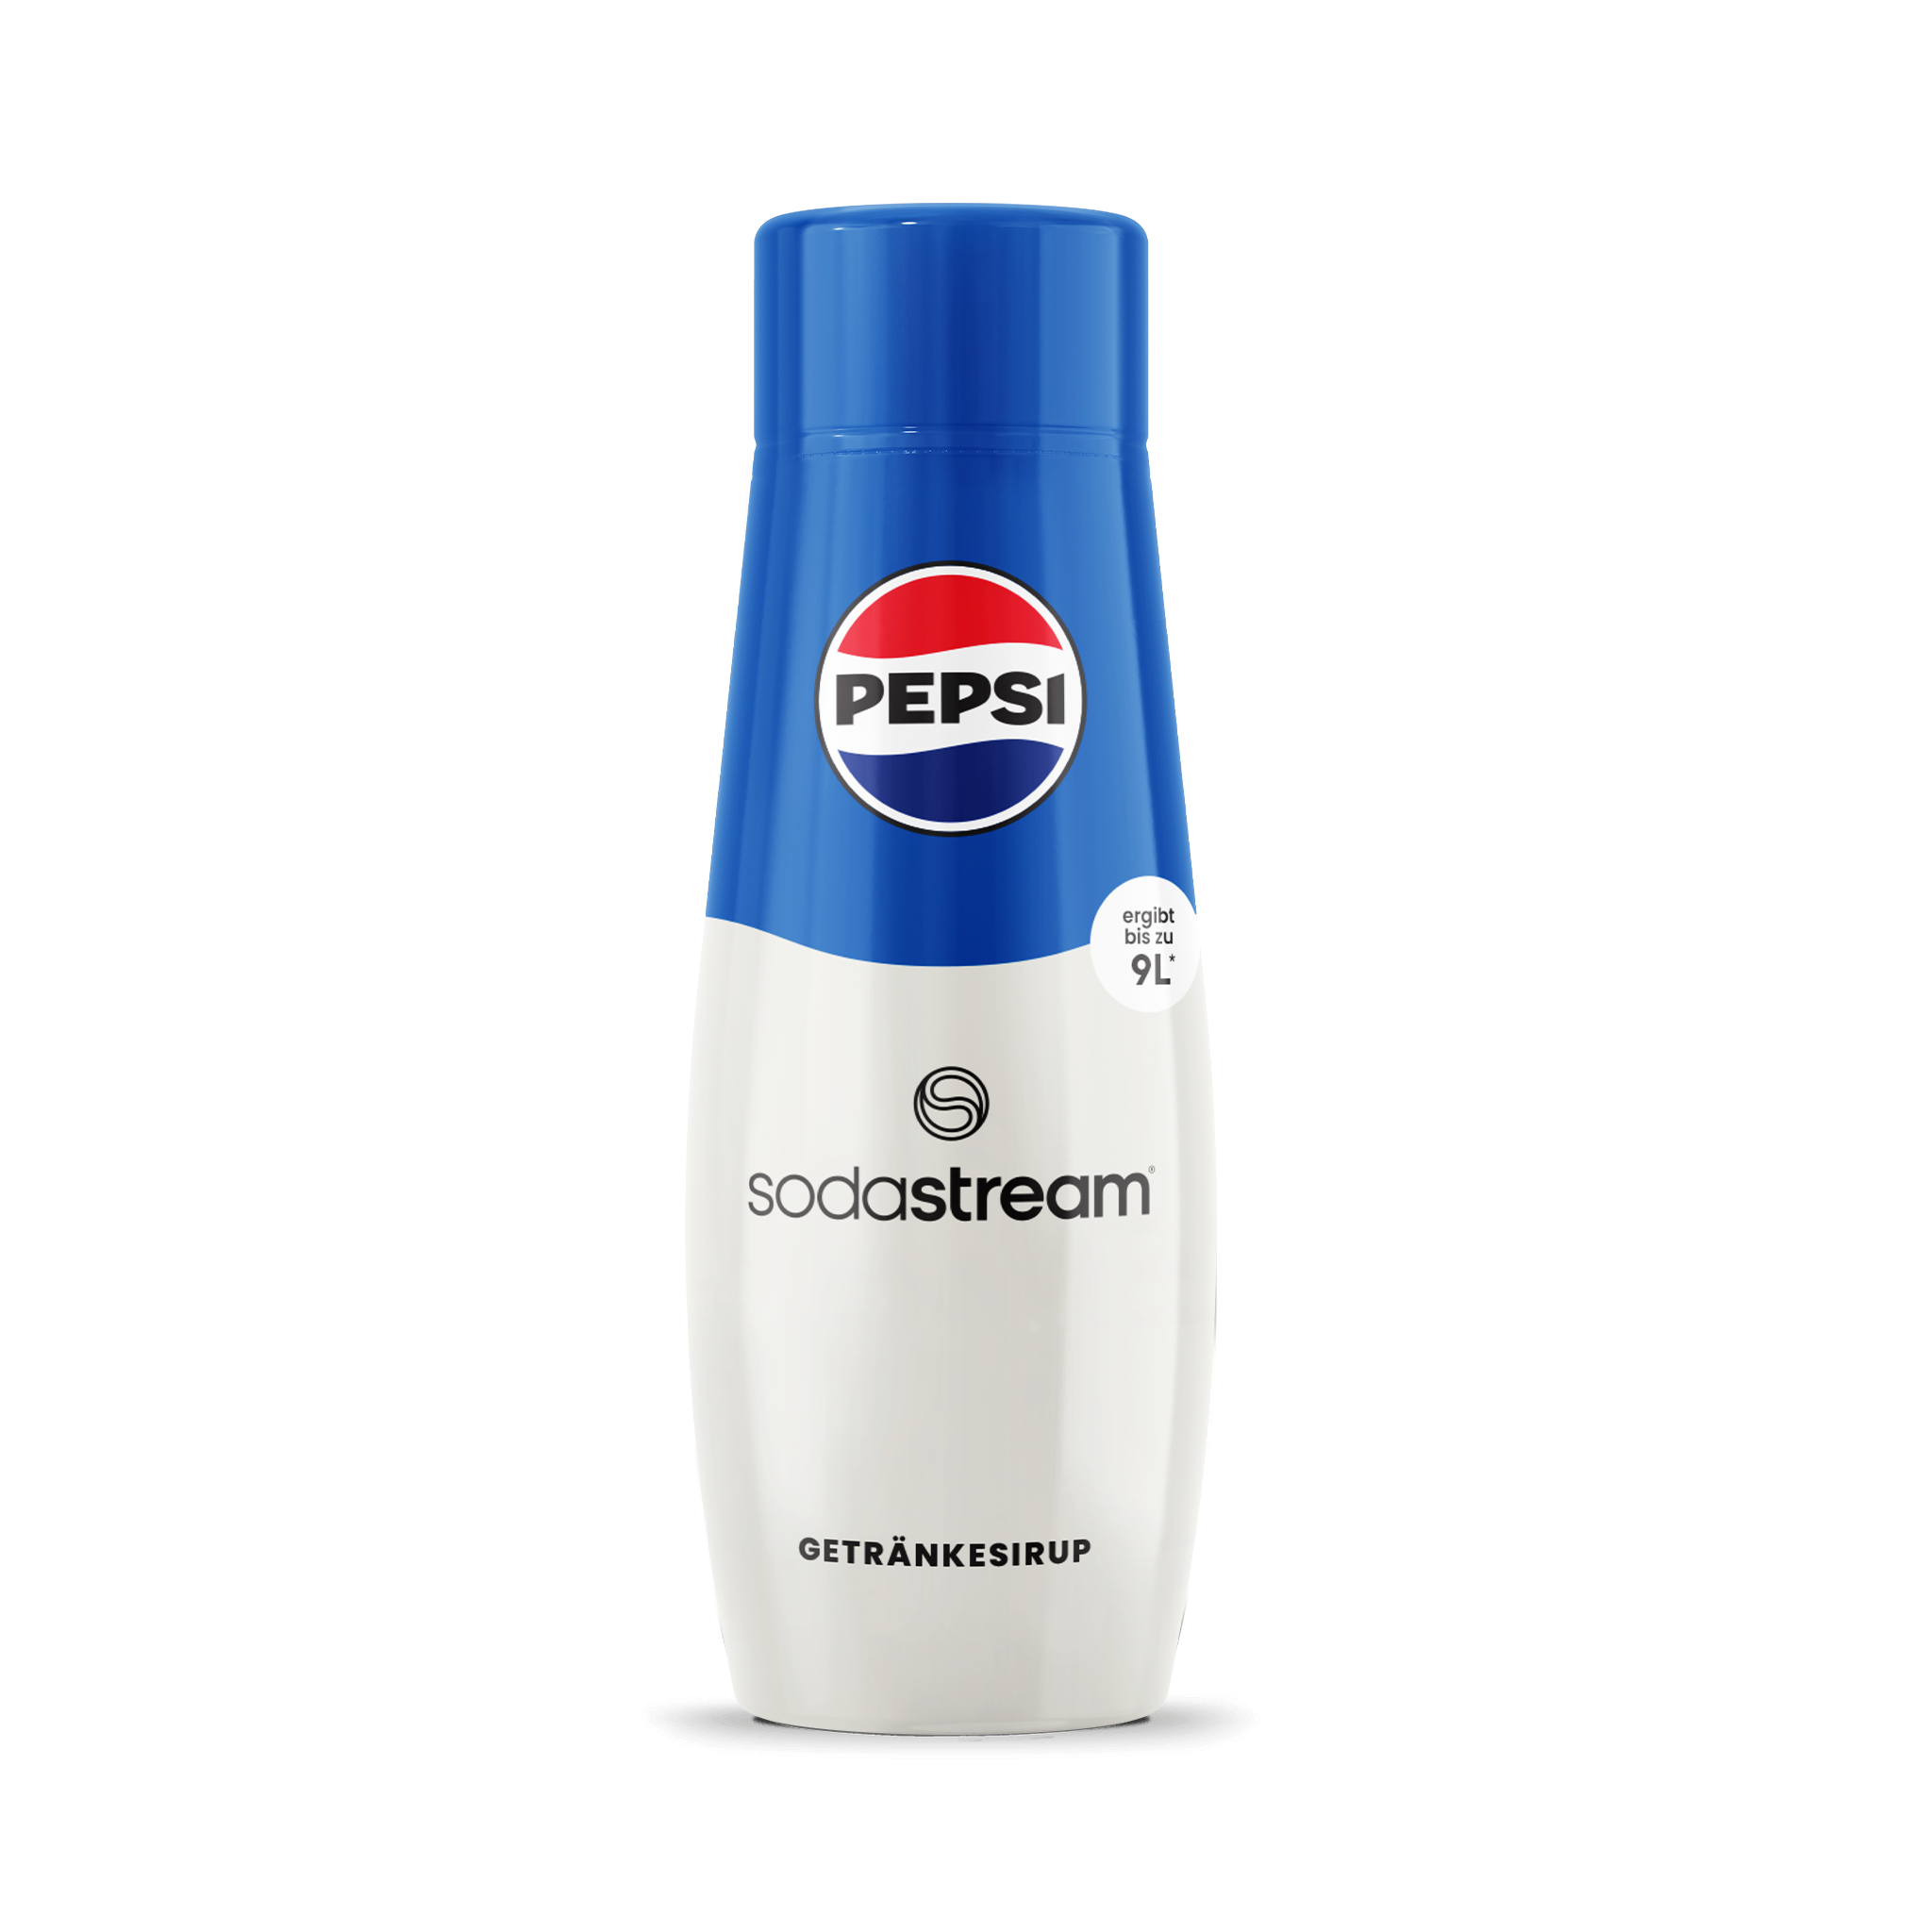 Pepsi Sirup 440ml sodastream